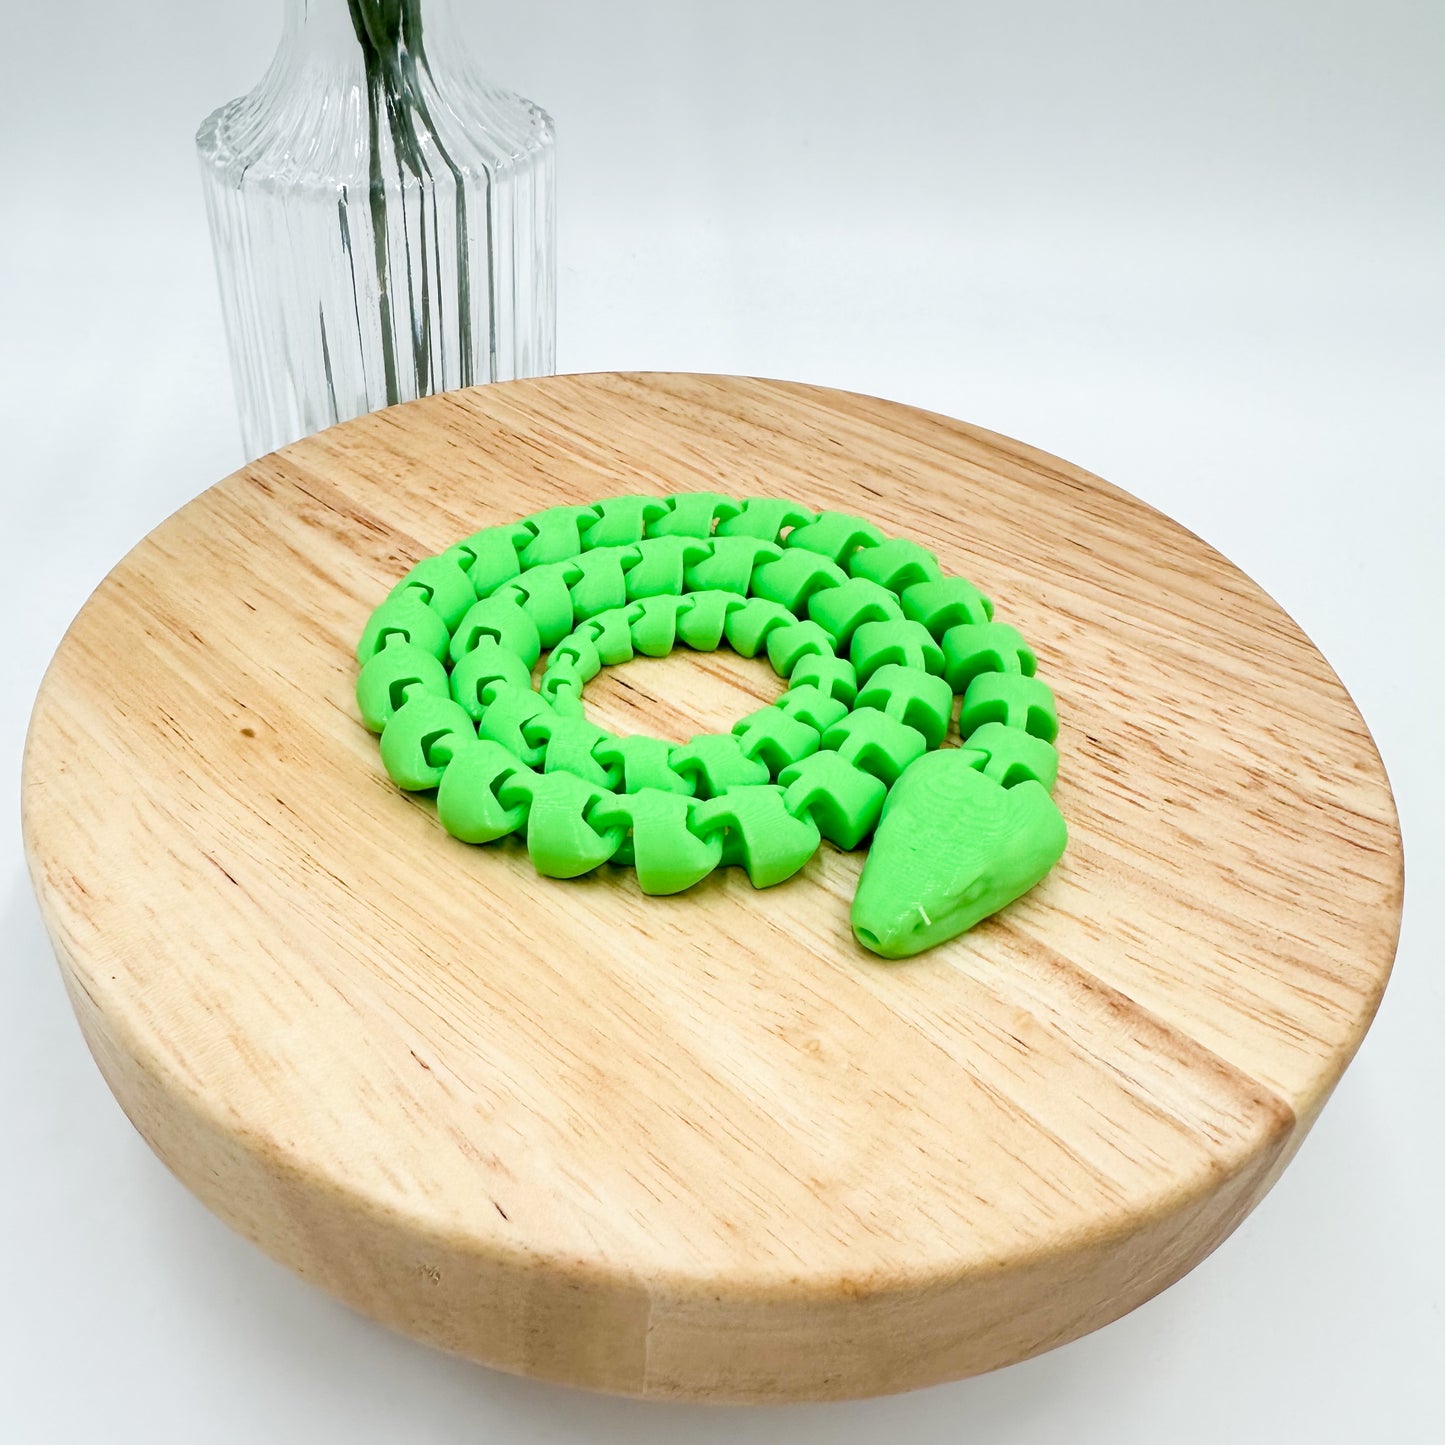 3D Printed Articulating Snake Figurine